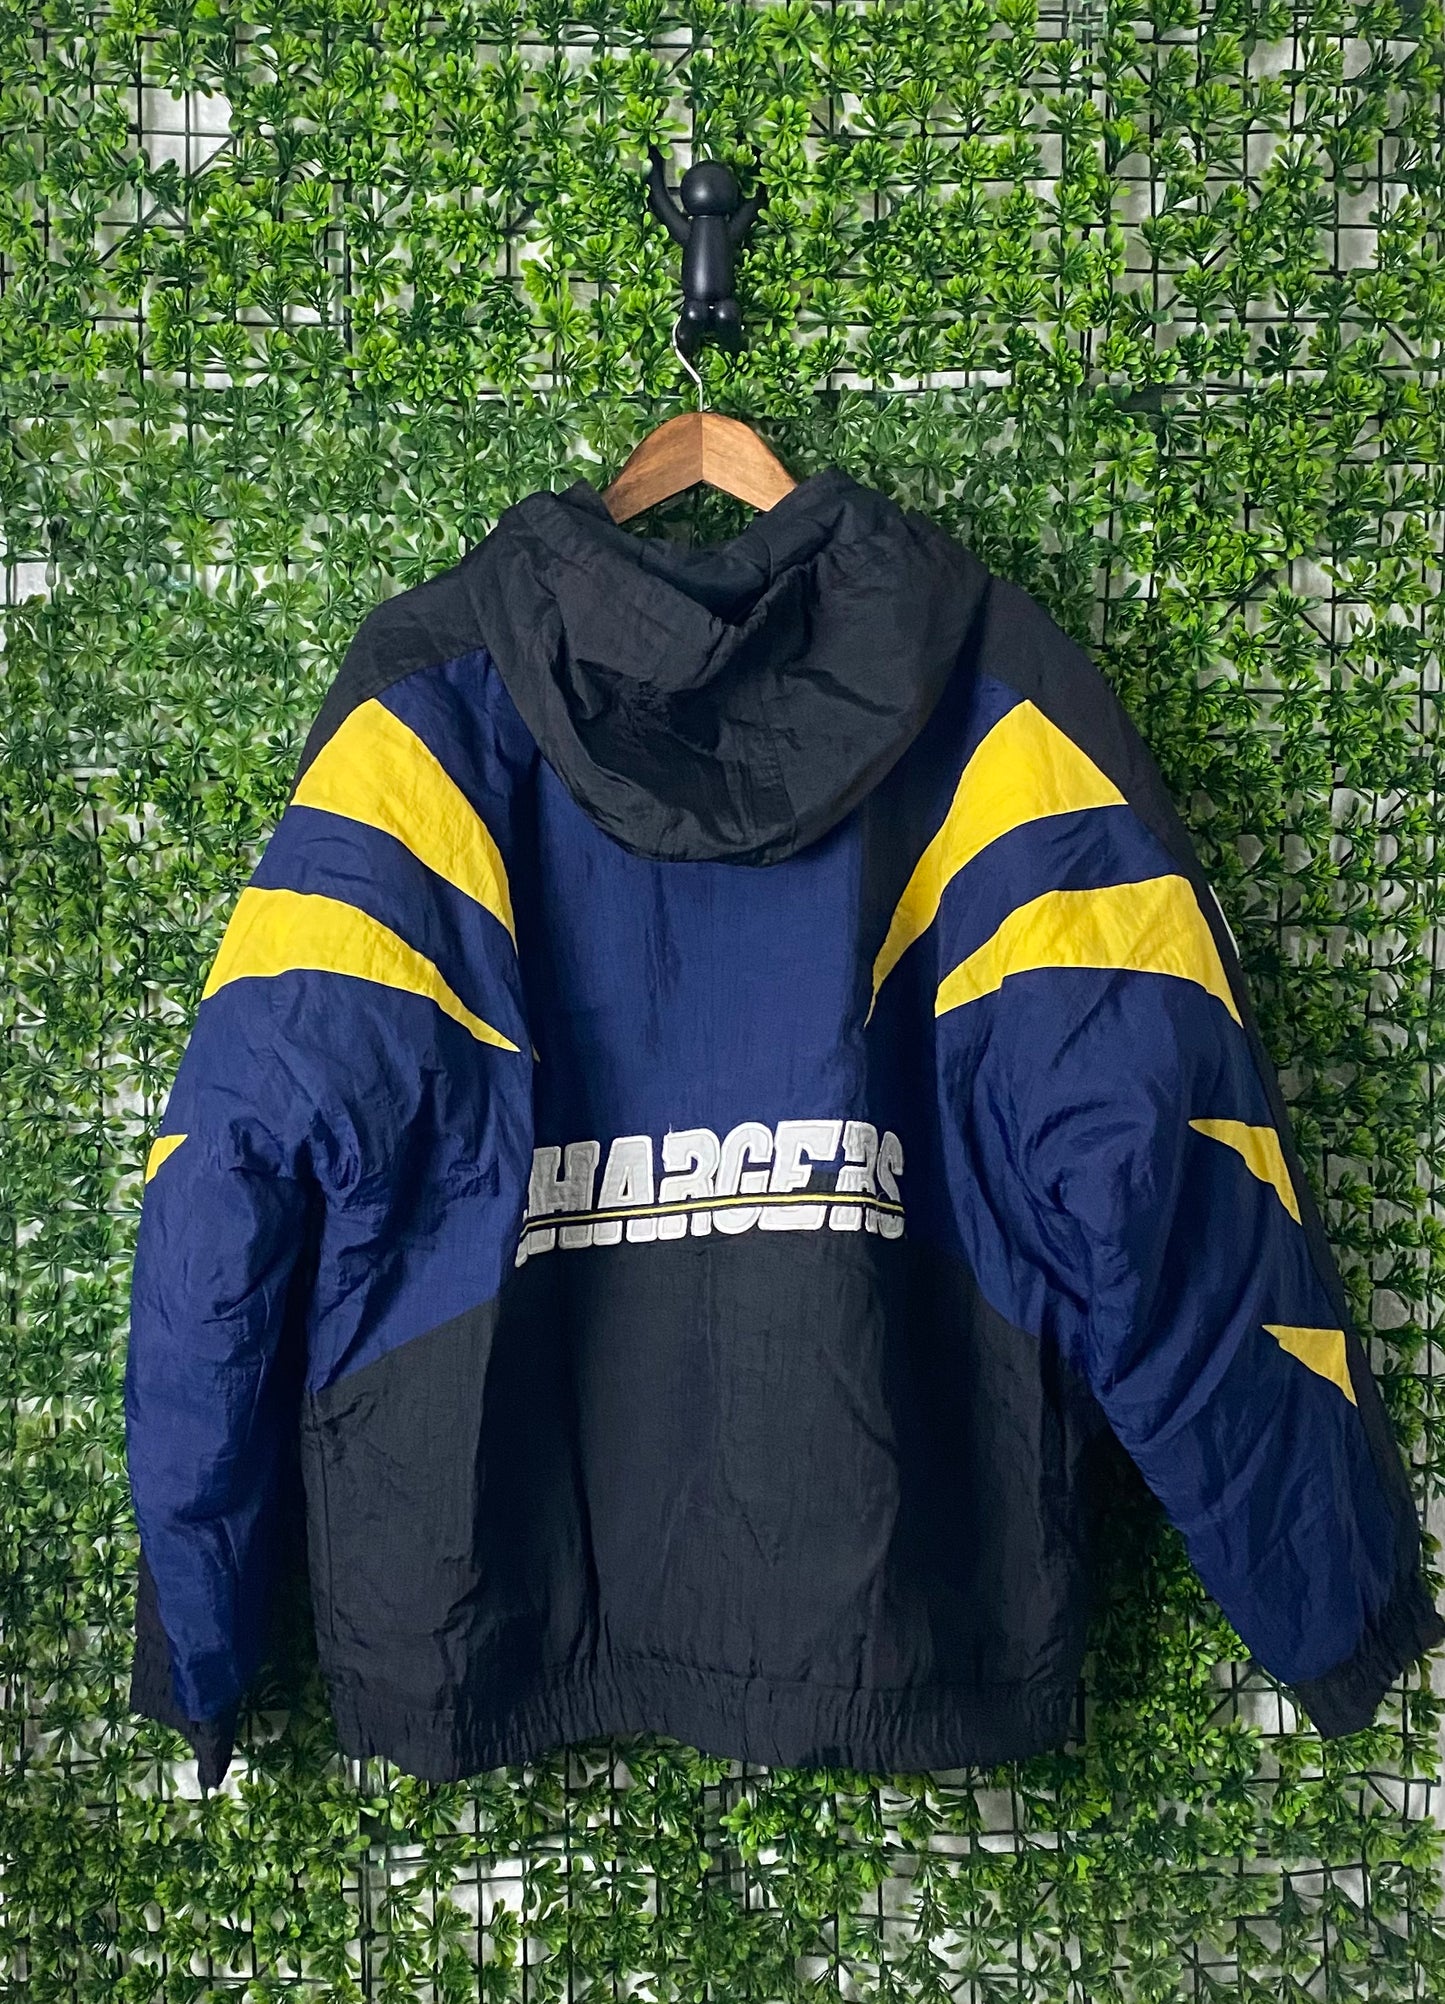 NFL Vintage Chargers Embroidered Jacket